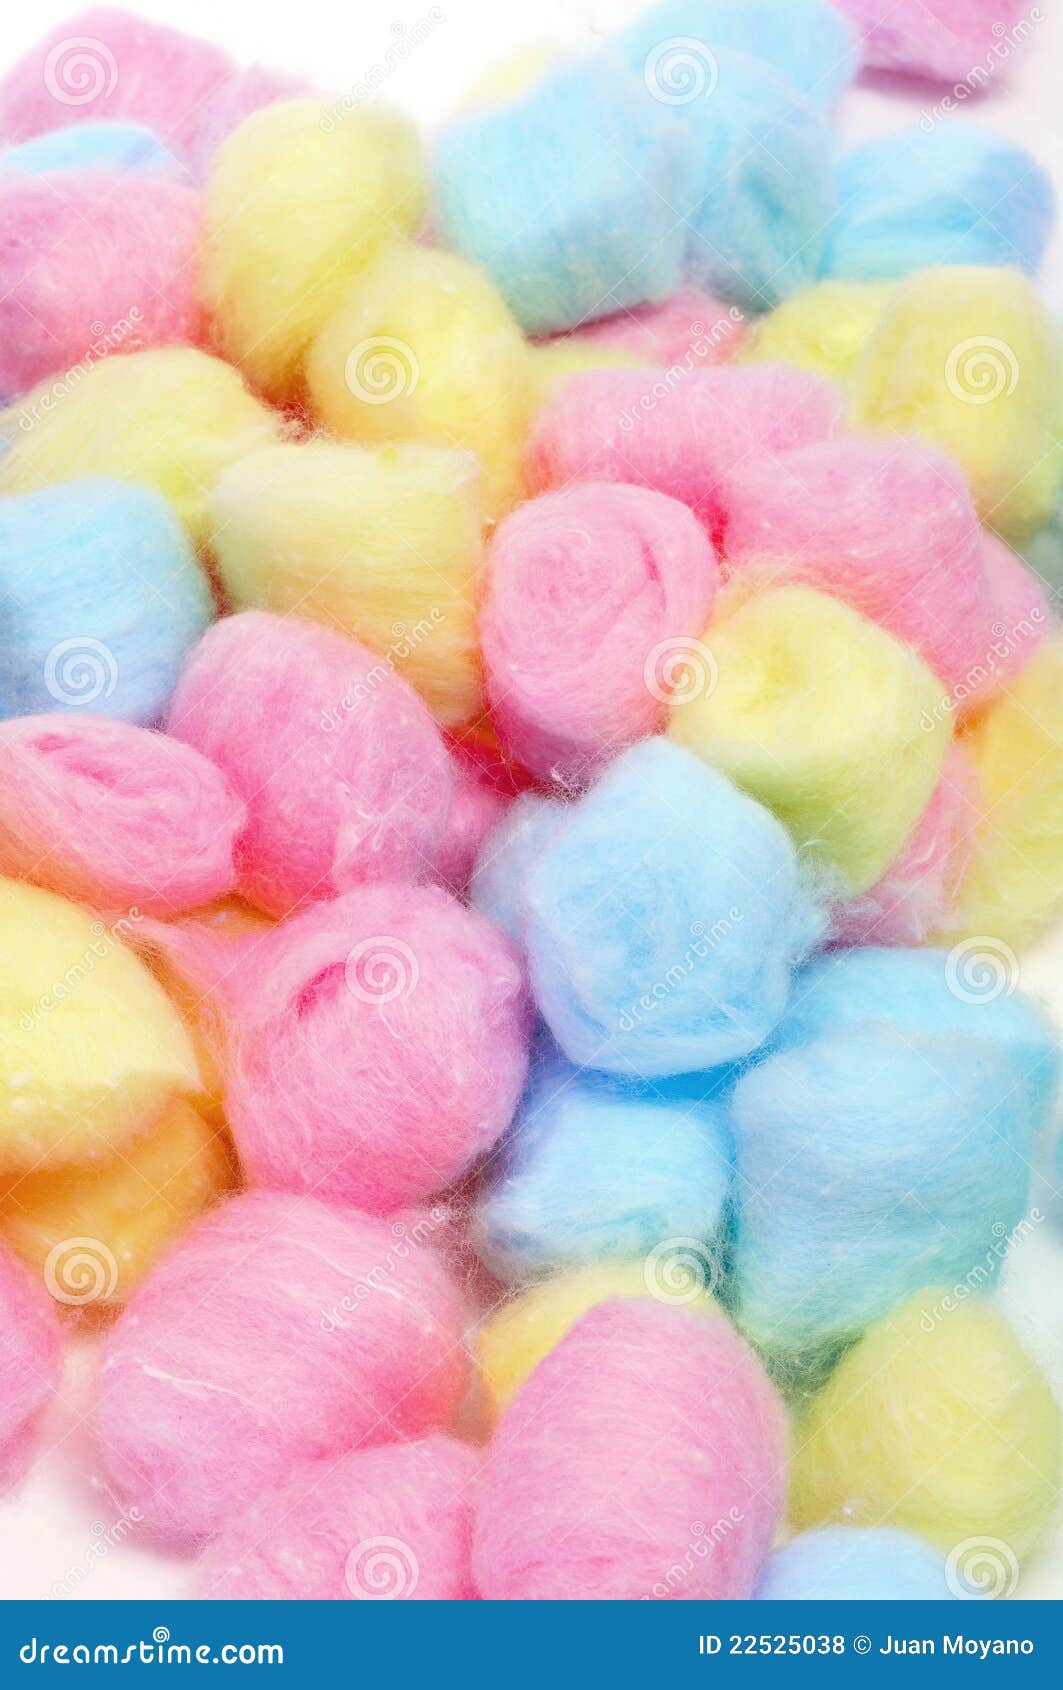 Cotton balls stock photo. Image of medical, manicure - 22525038